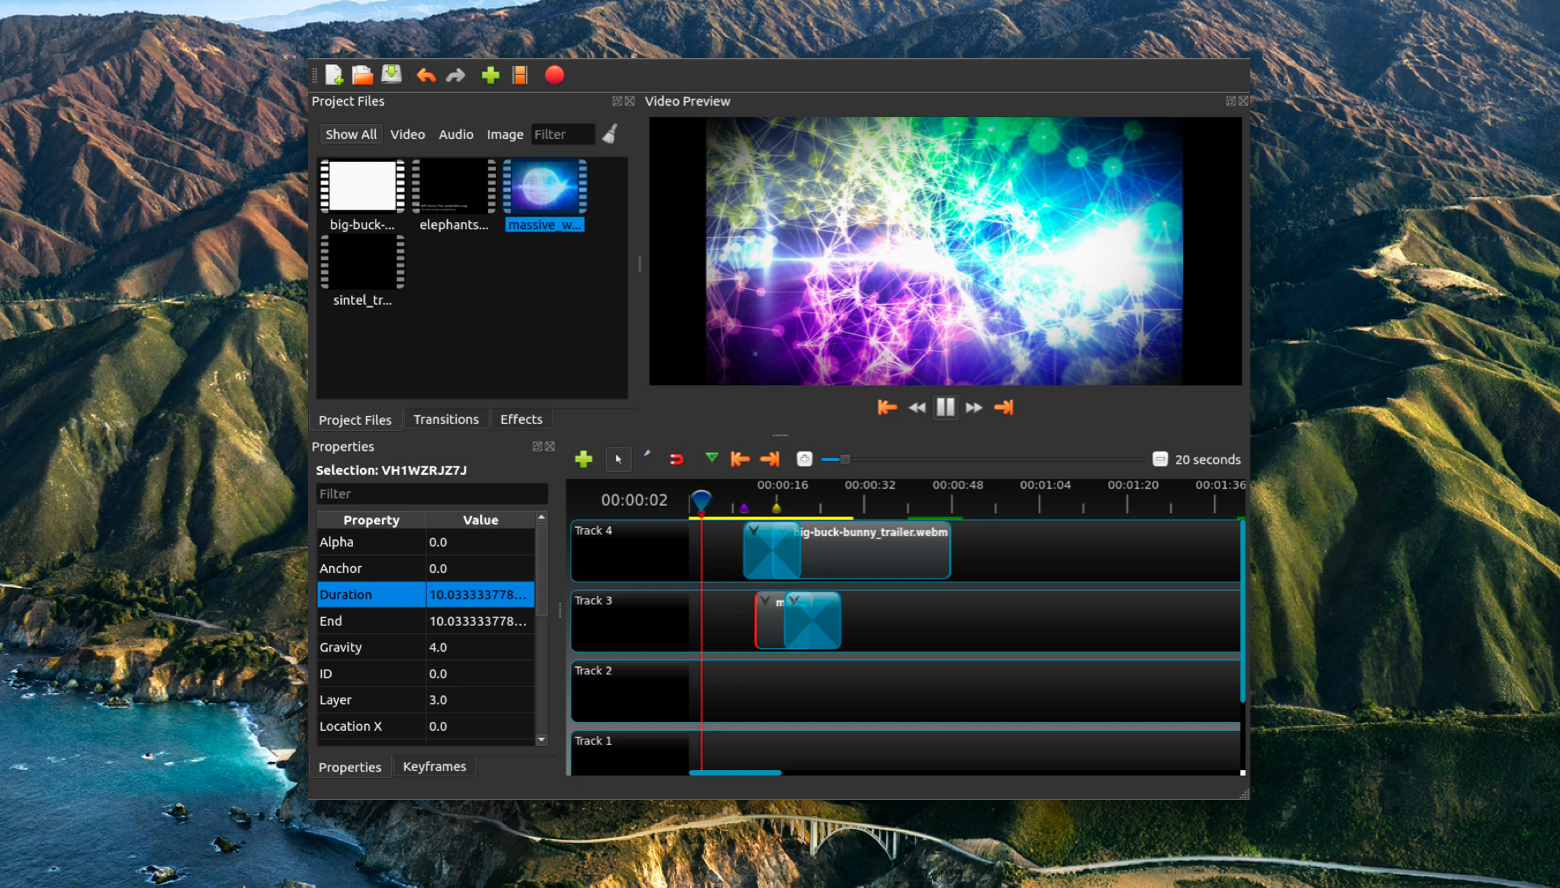 openshot video editing software download